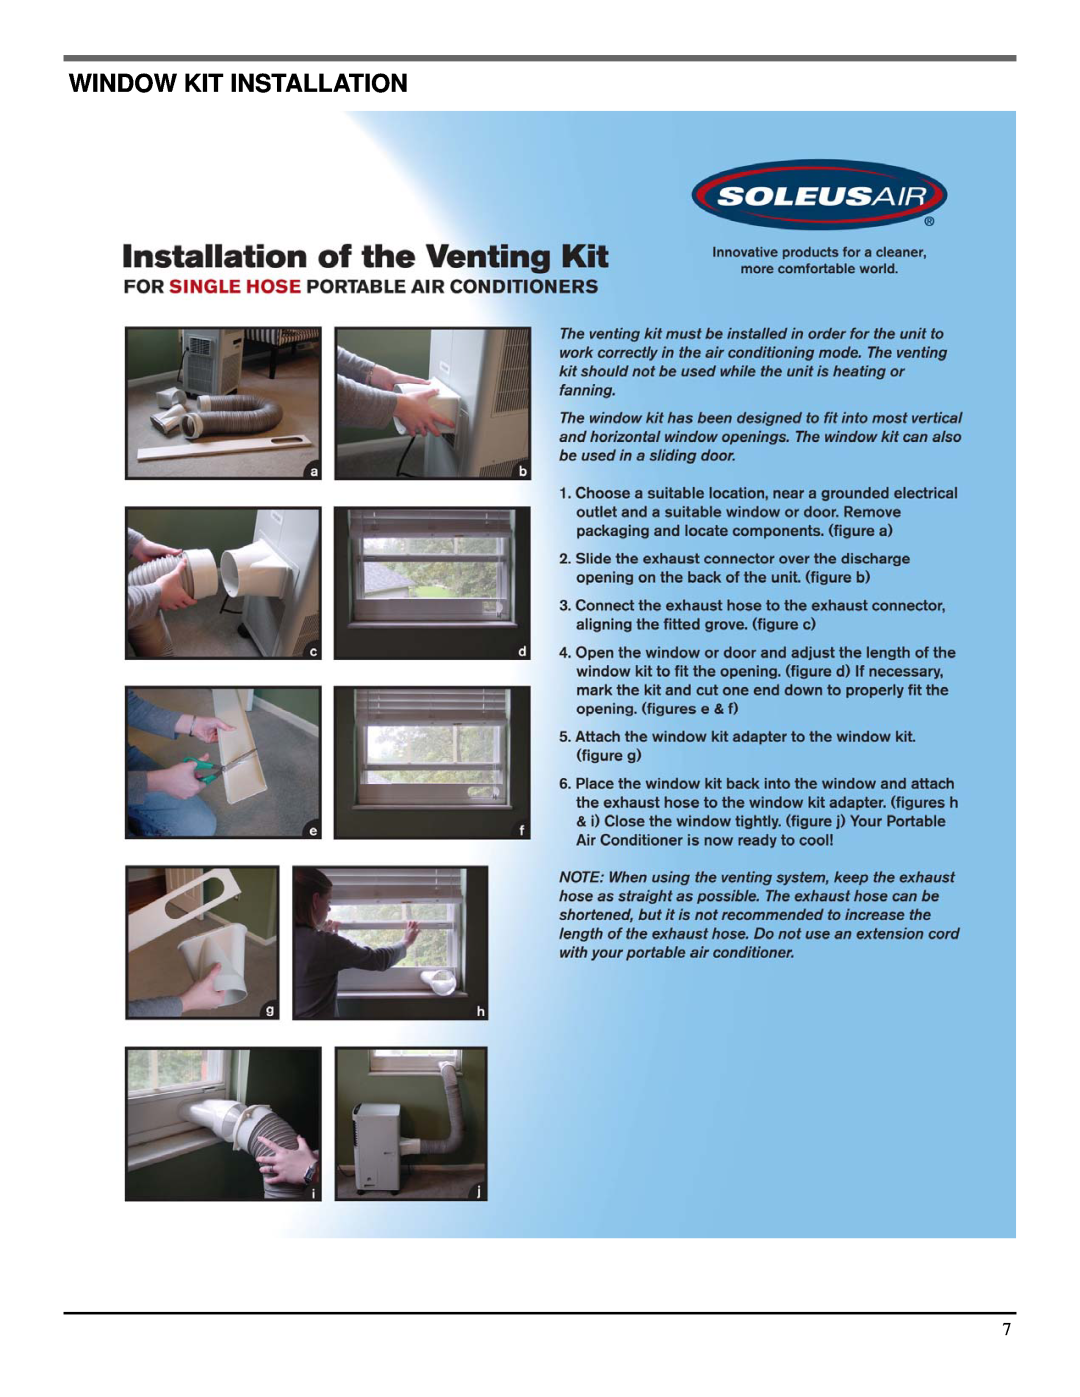 Soleus Air PE4-11R-03 manual Window Kit Installation 